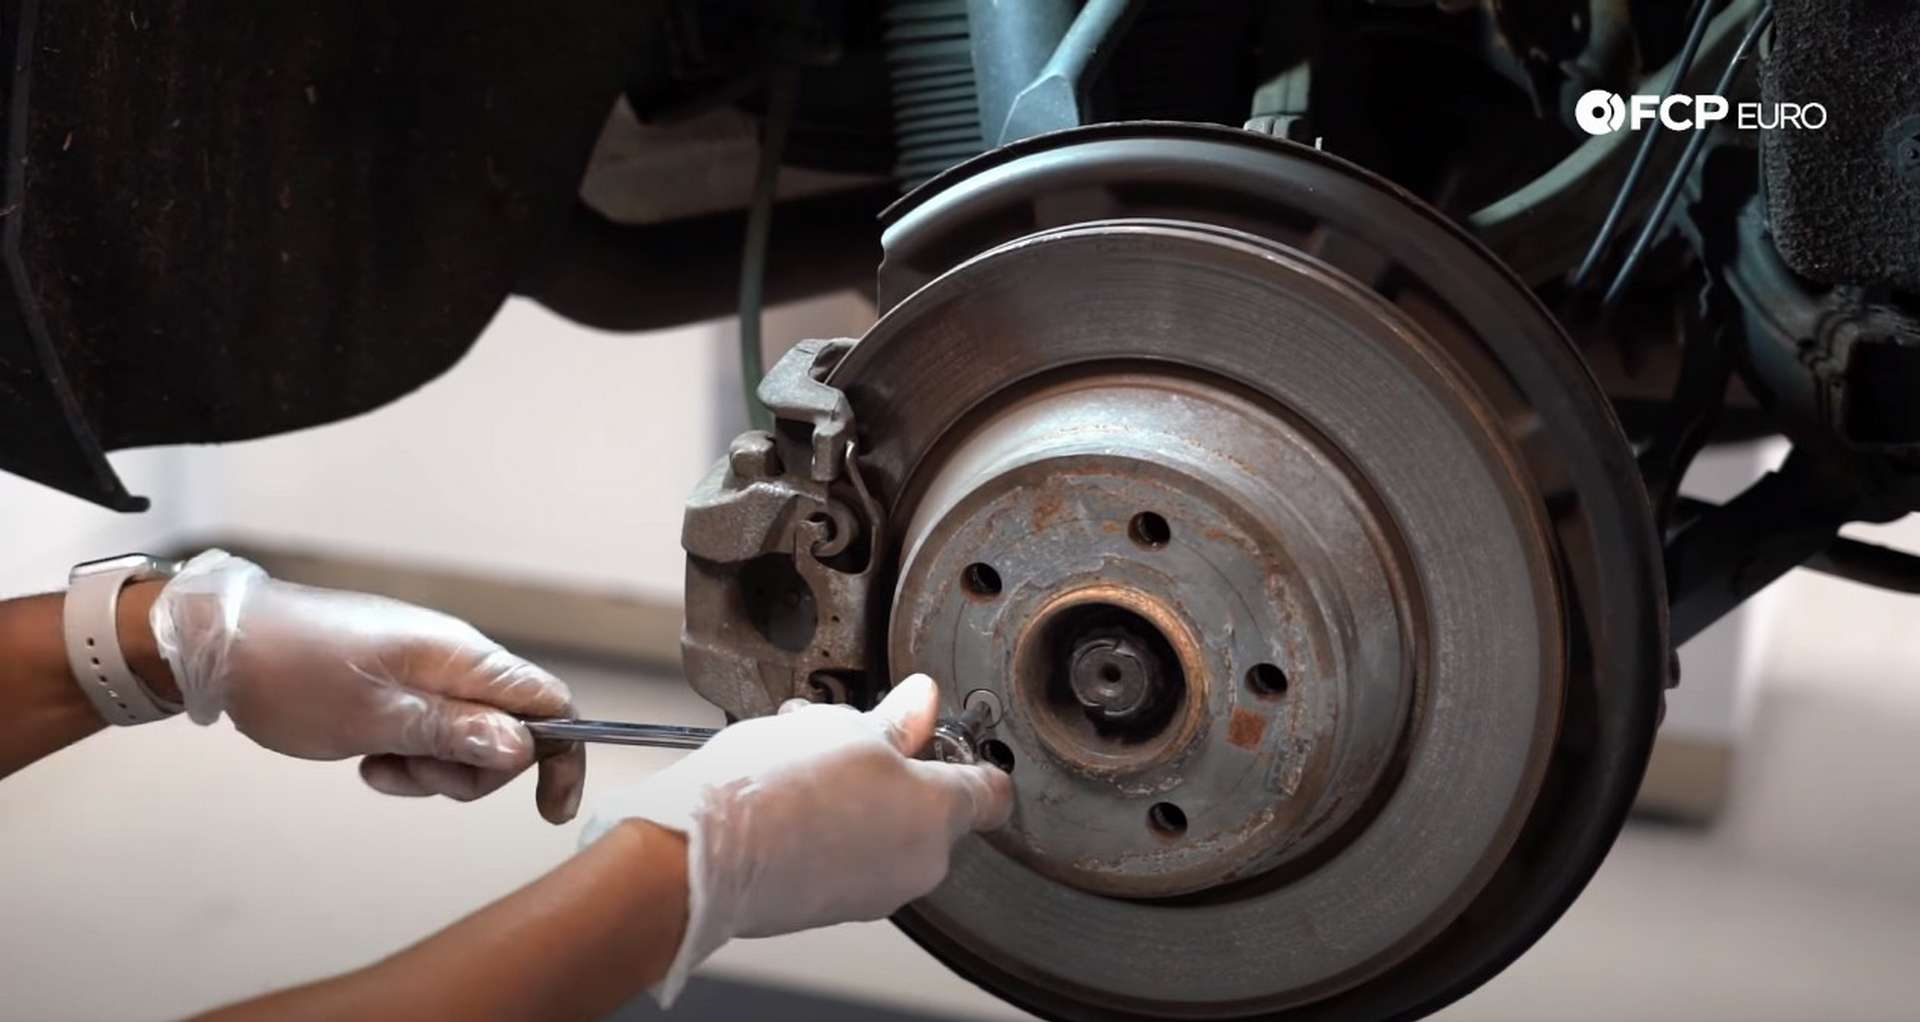 DIY Mercedes W211/212 Rear Brake Job removing the rotor set screw